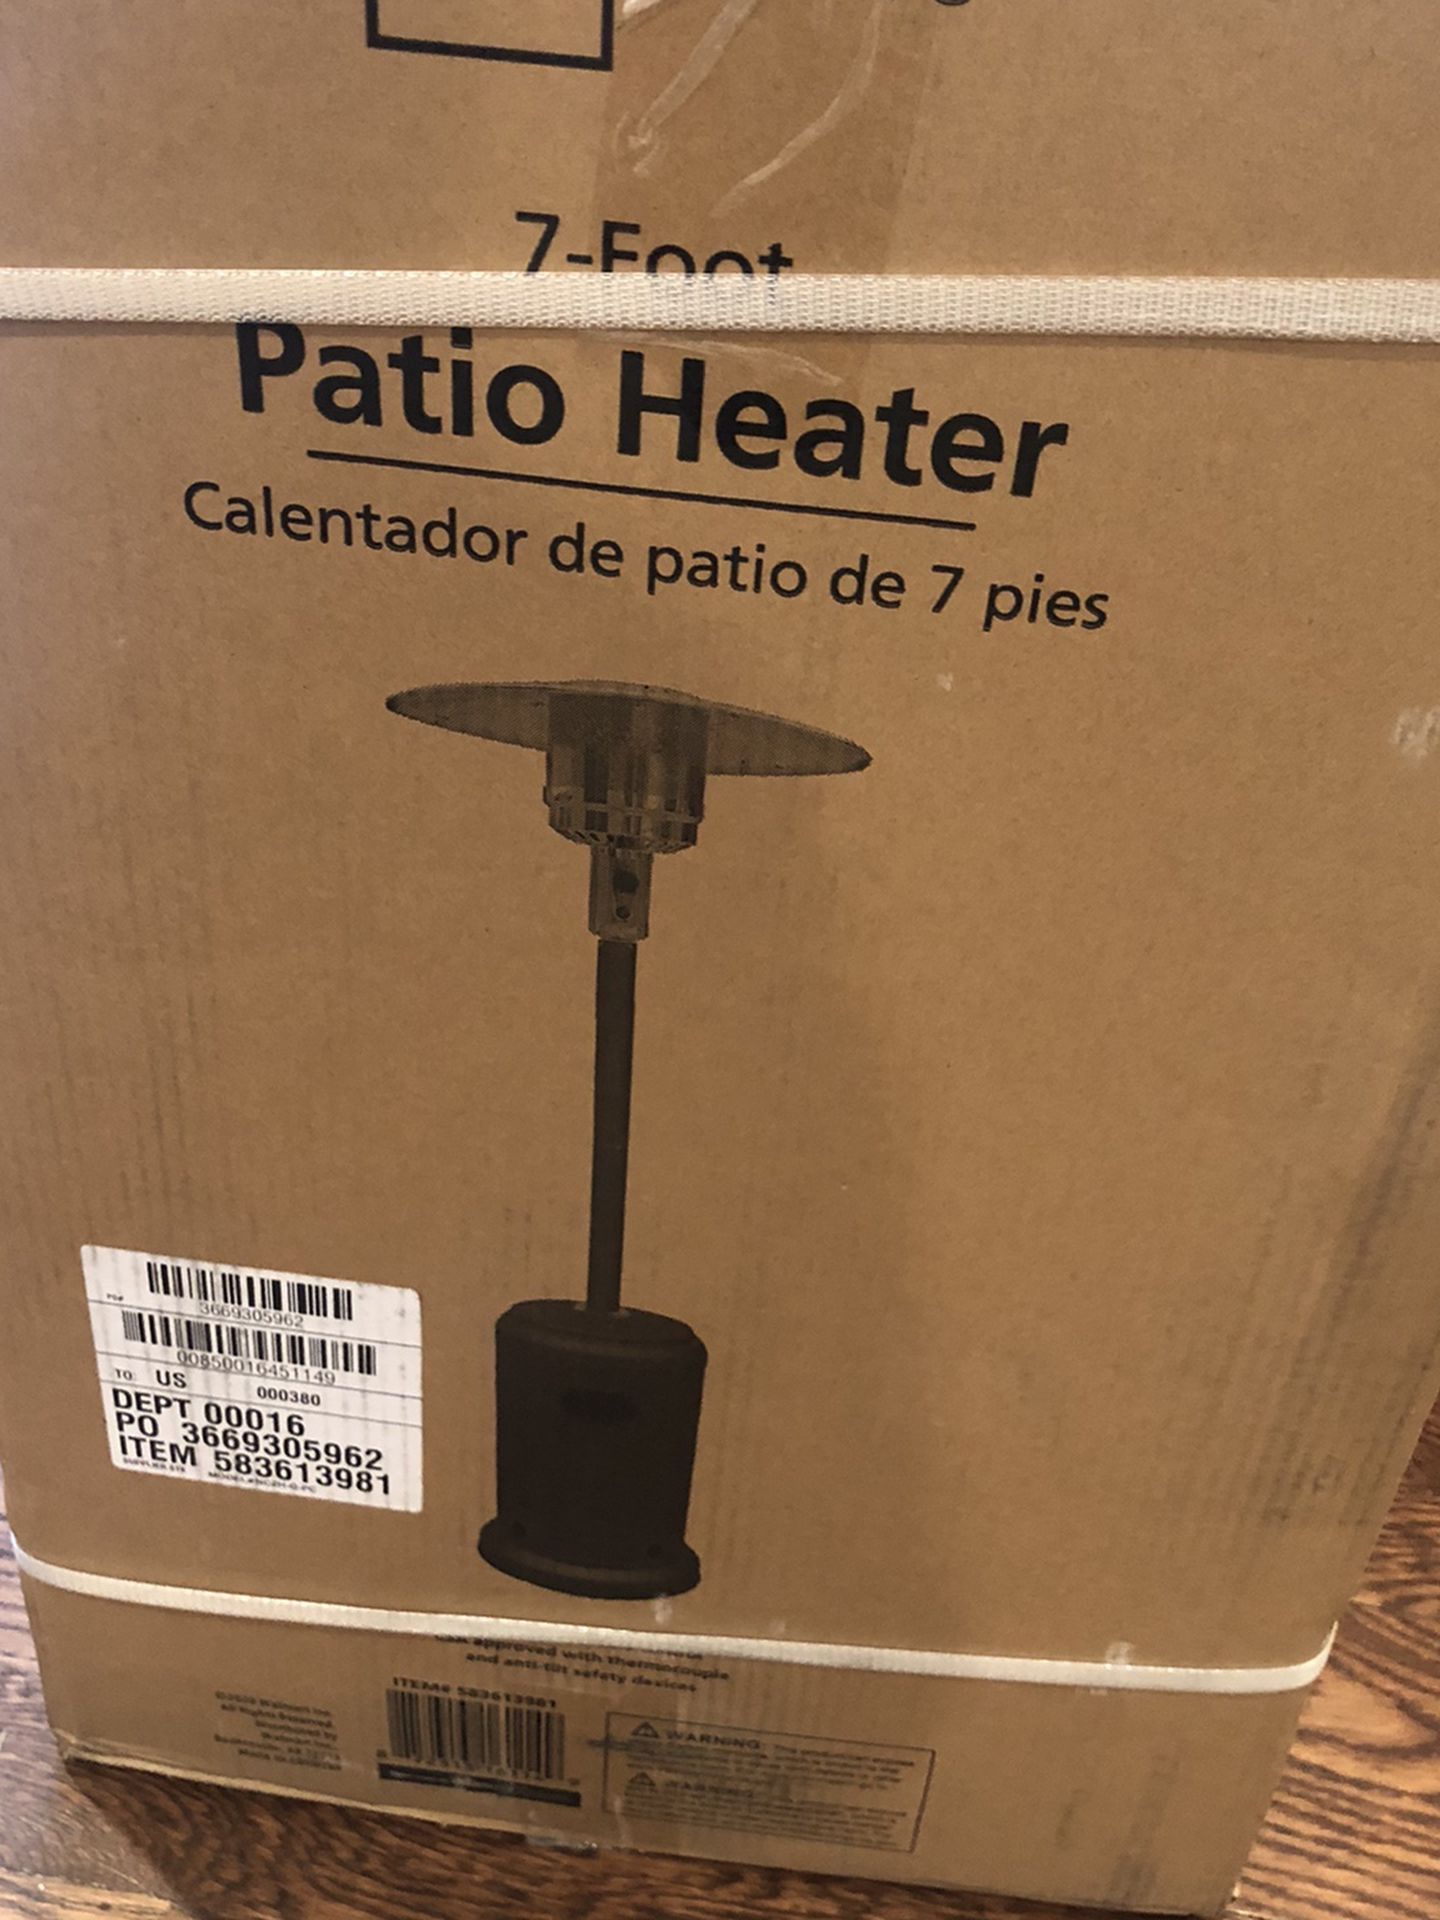 Patio Heater!